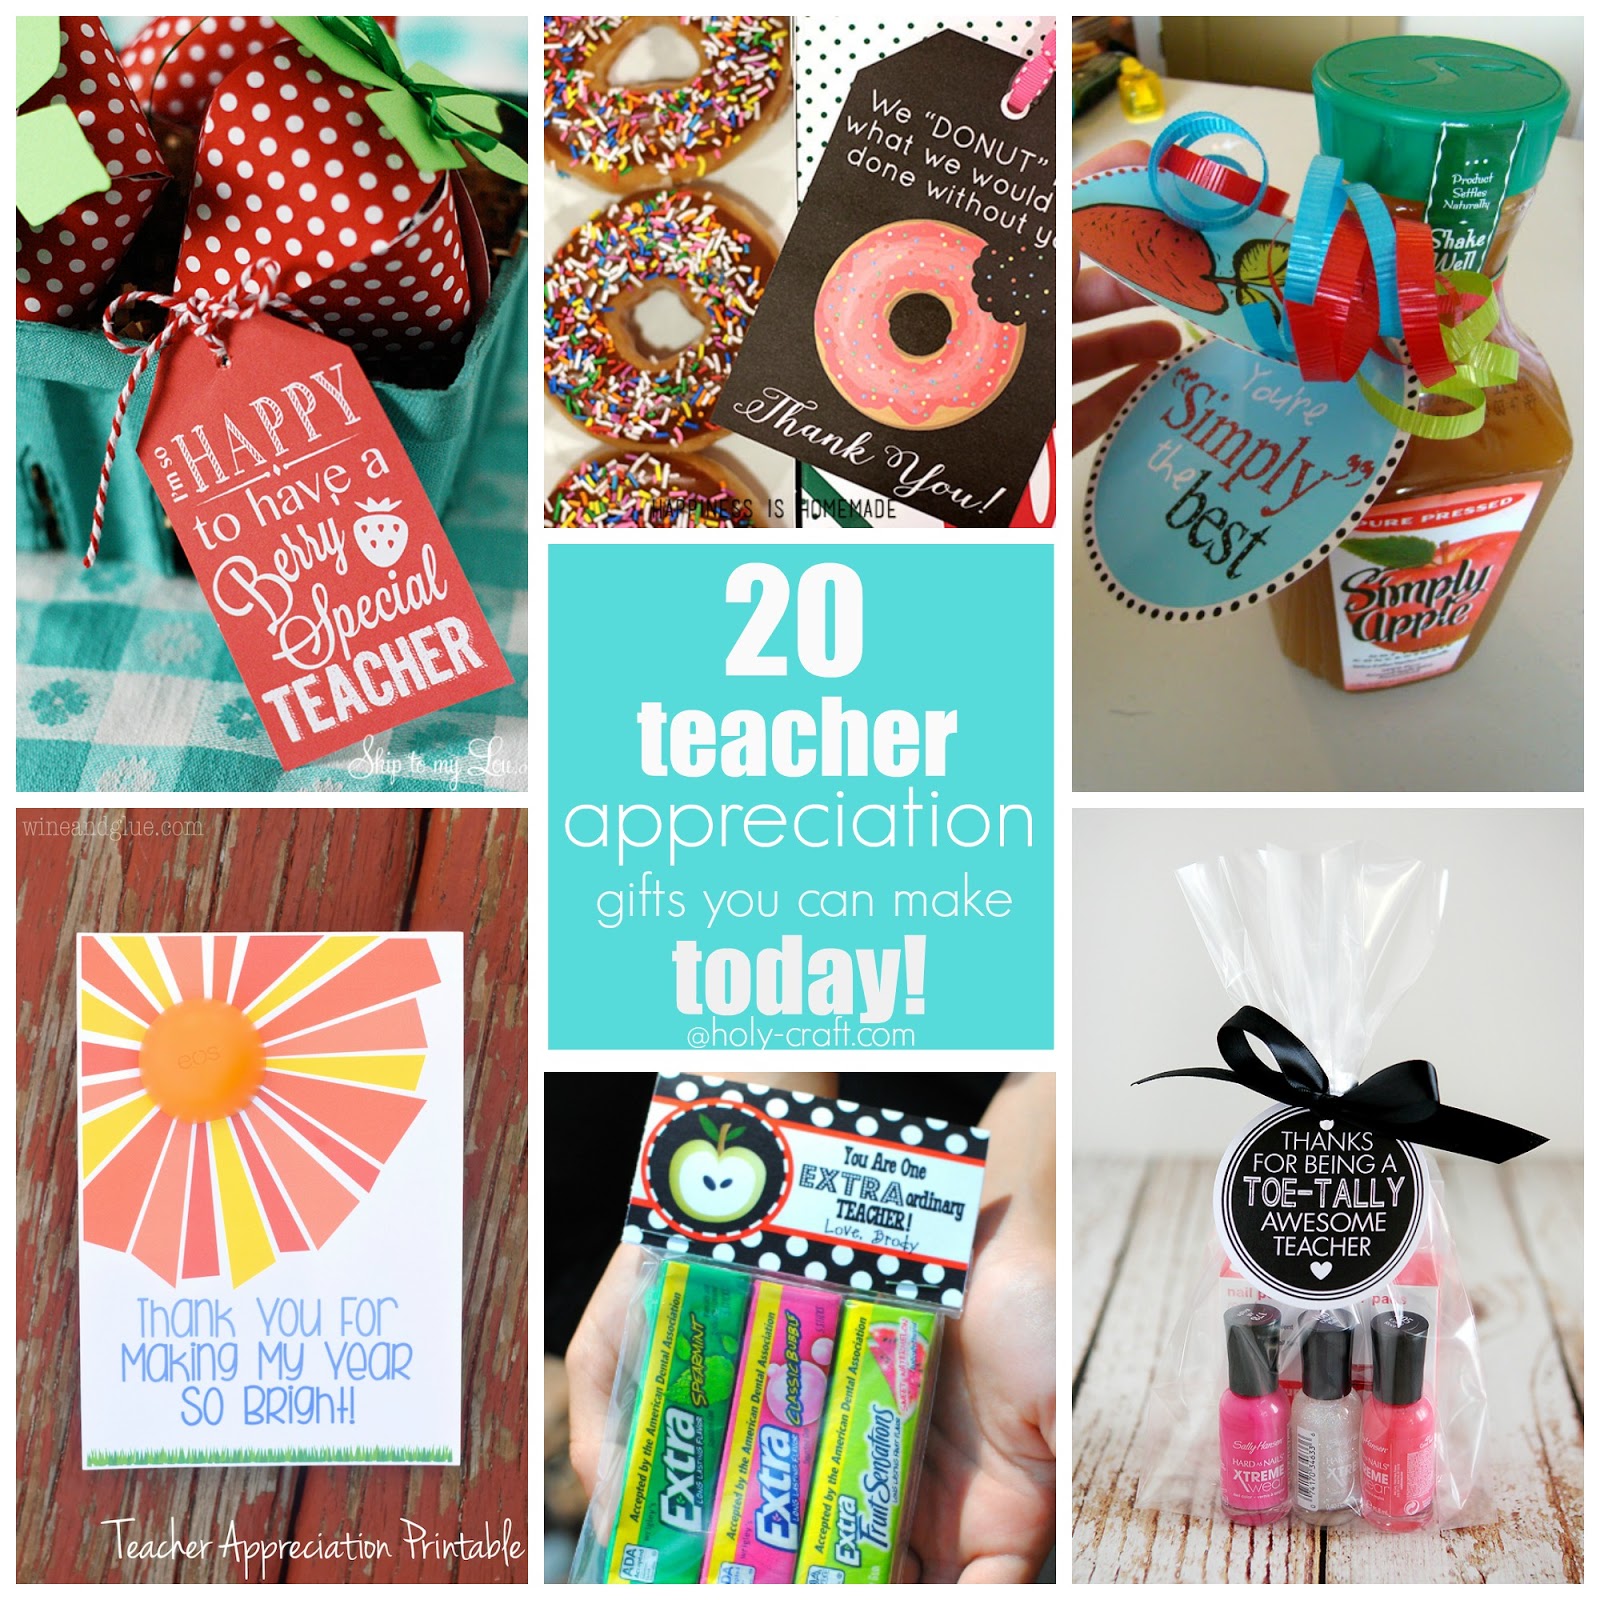 20 Teacher appreciation gifts you can make today! - Rachel Teodoro